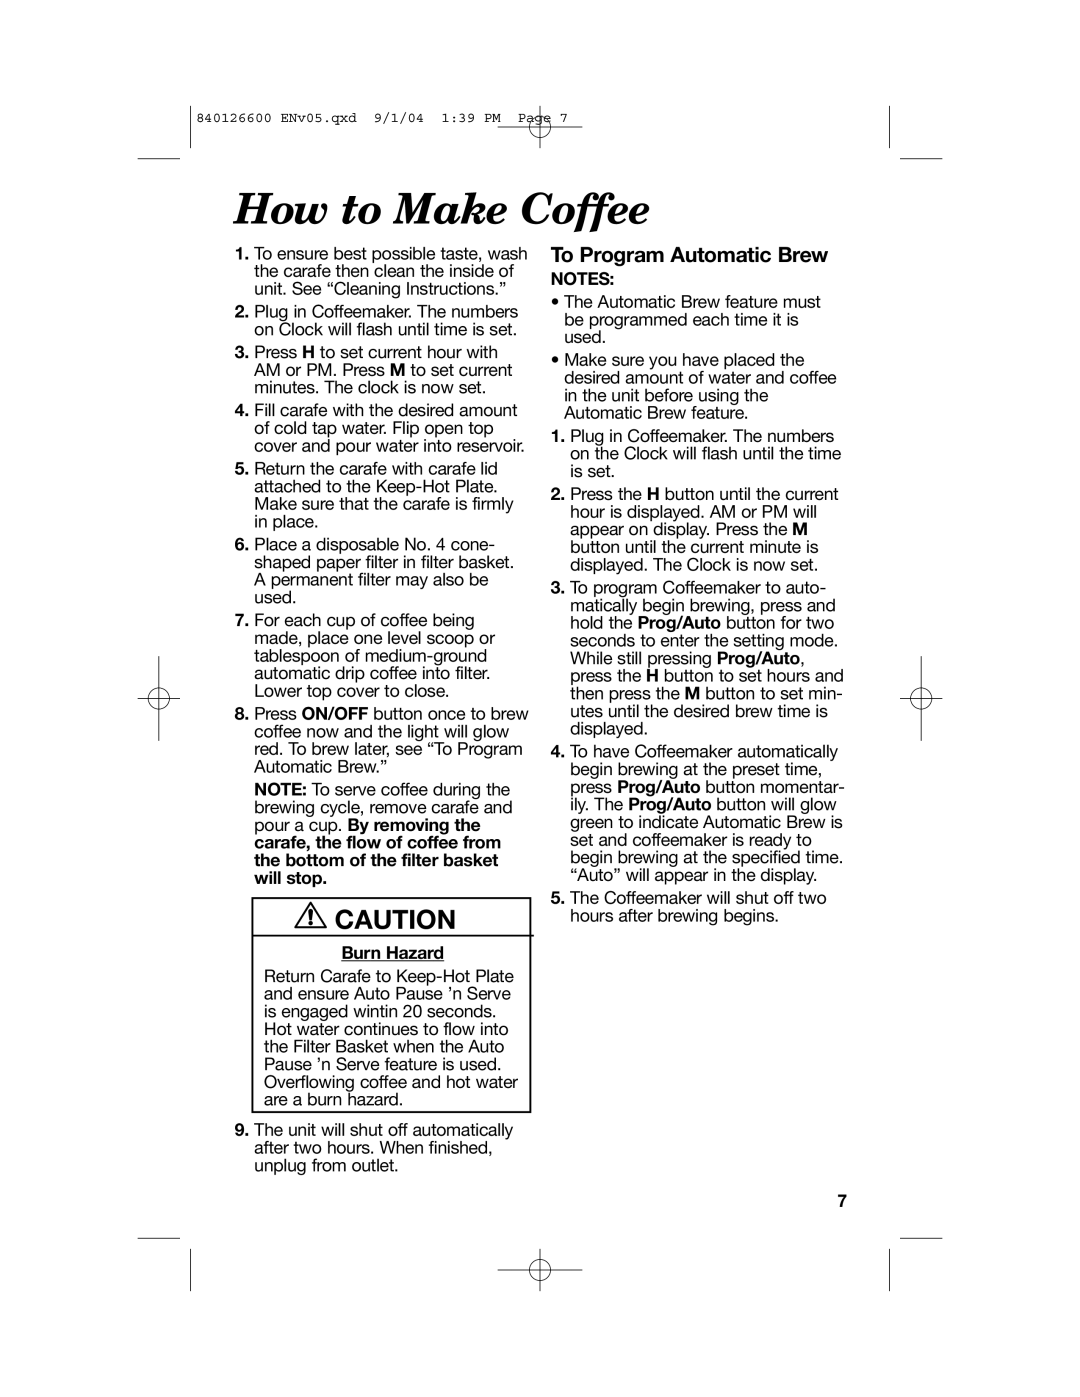 Hamilton Beach 80674 manual How to Make Coffee, To Program Automatic Brew 